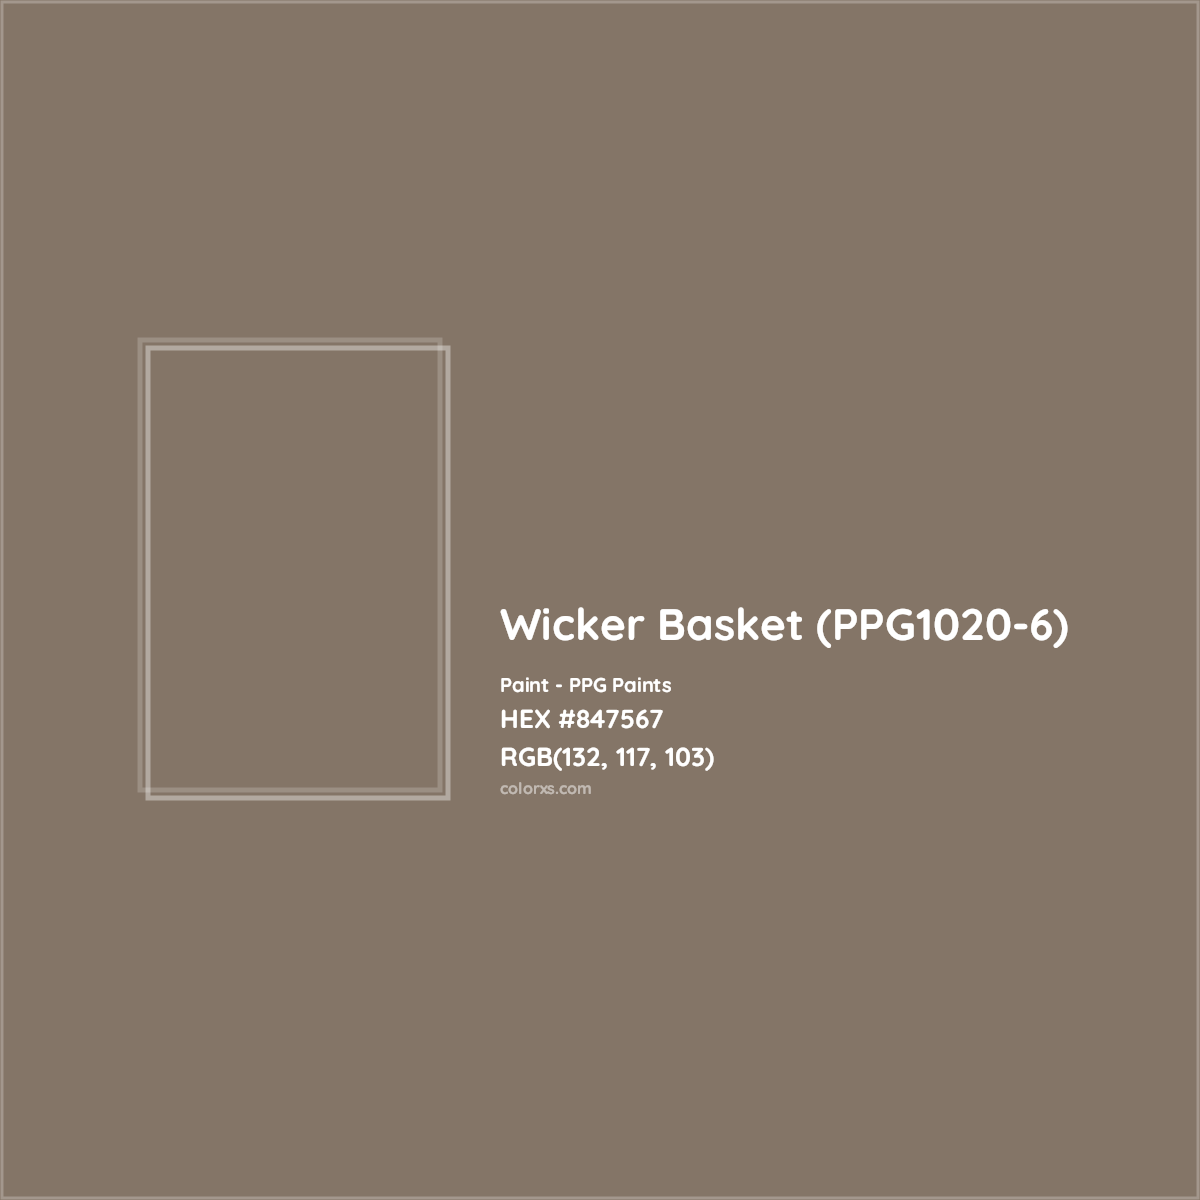 HEX #847567 Wicker Basket (PPG1020-6) Paint PPG Paints - Color Code